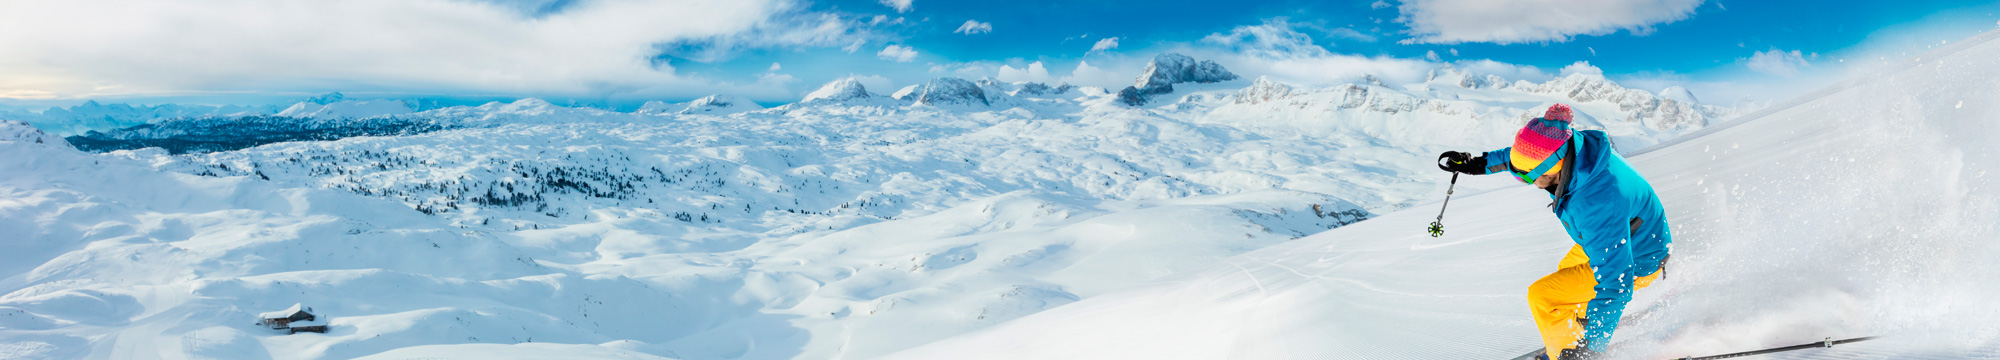 Esquí en los Alpes Franceses